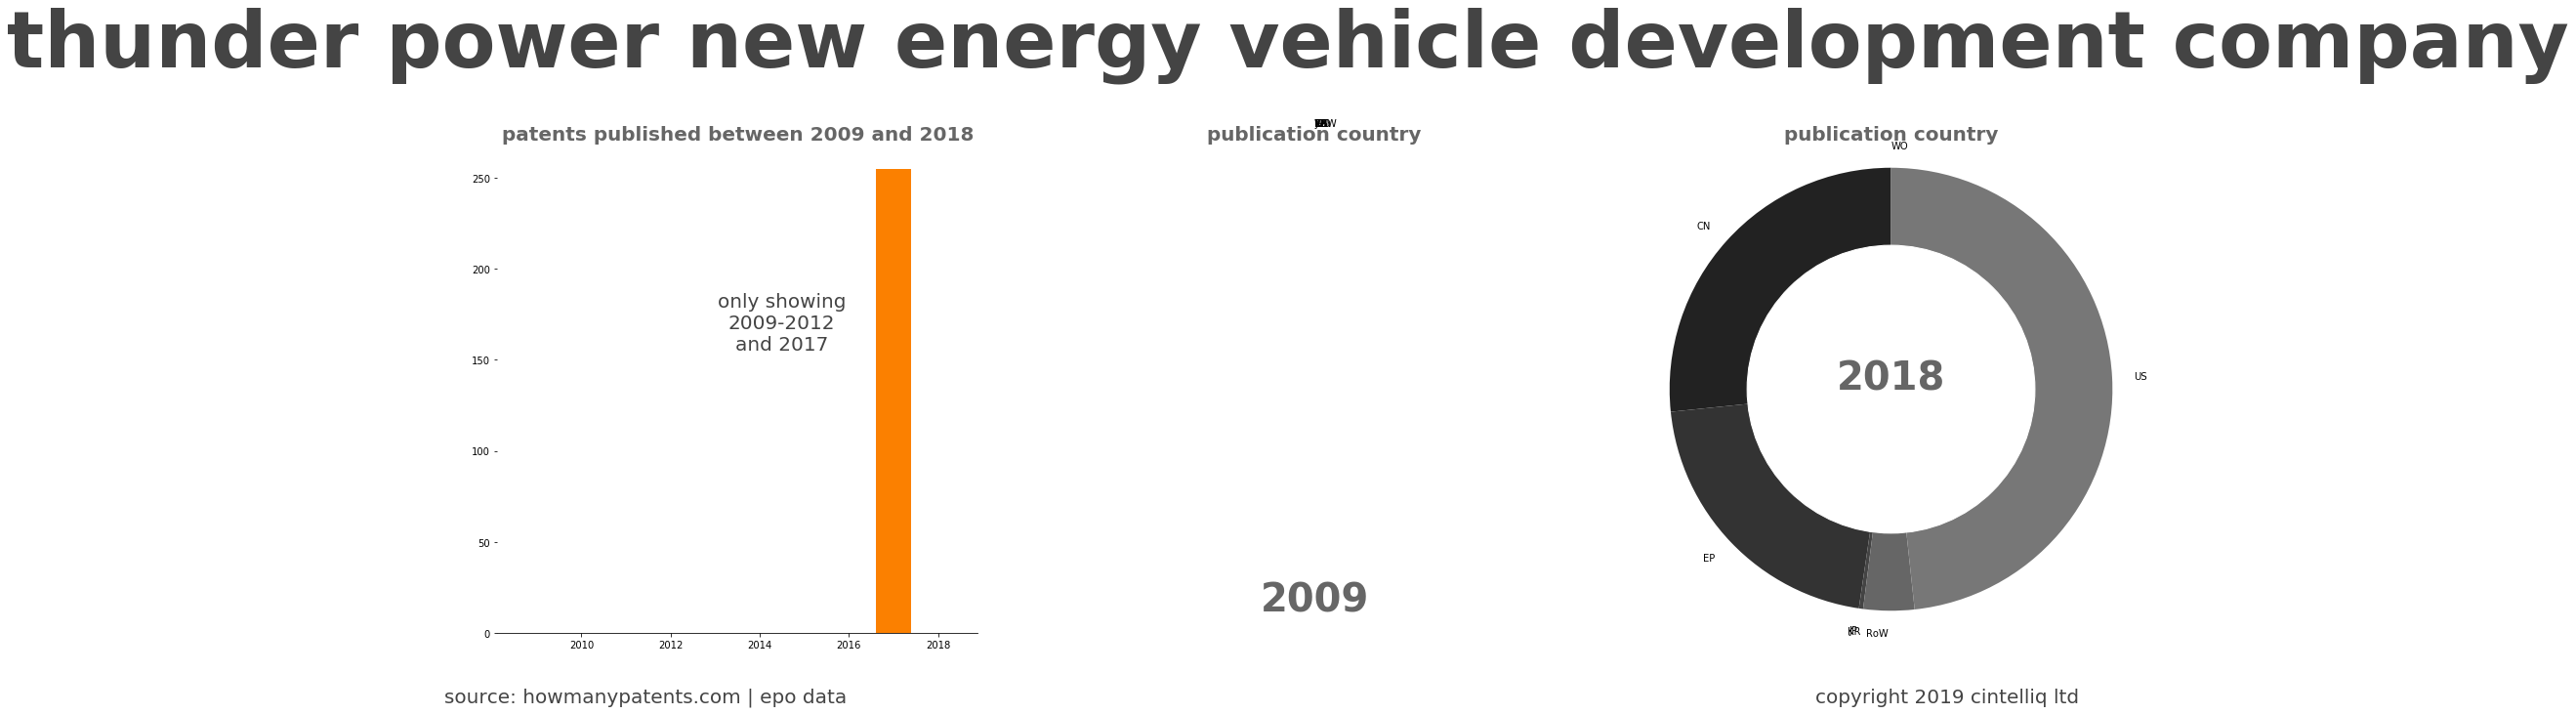 summary of patents for Thunder Power New Energy Vehicle Development Company